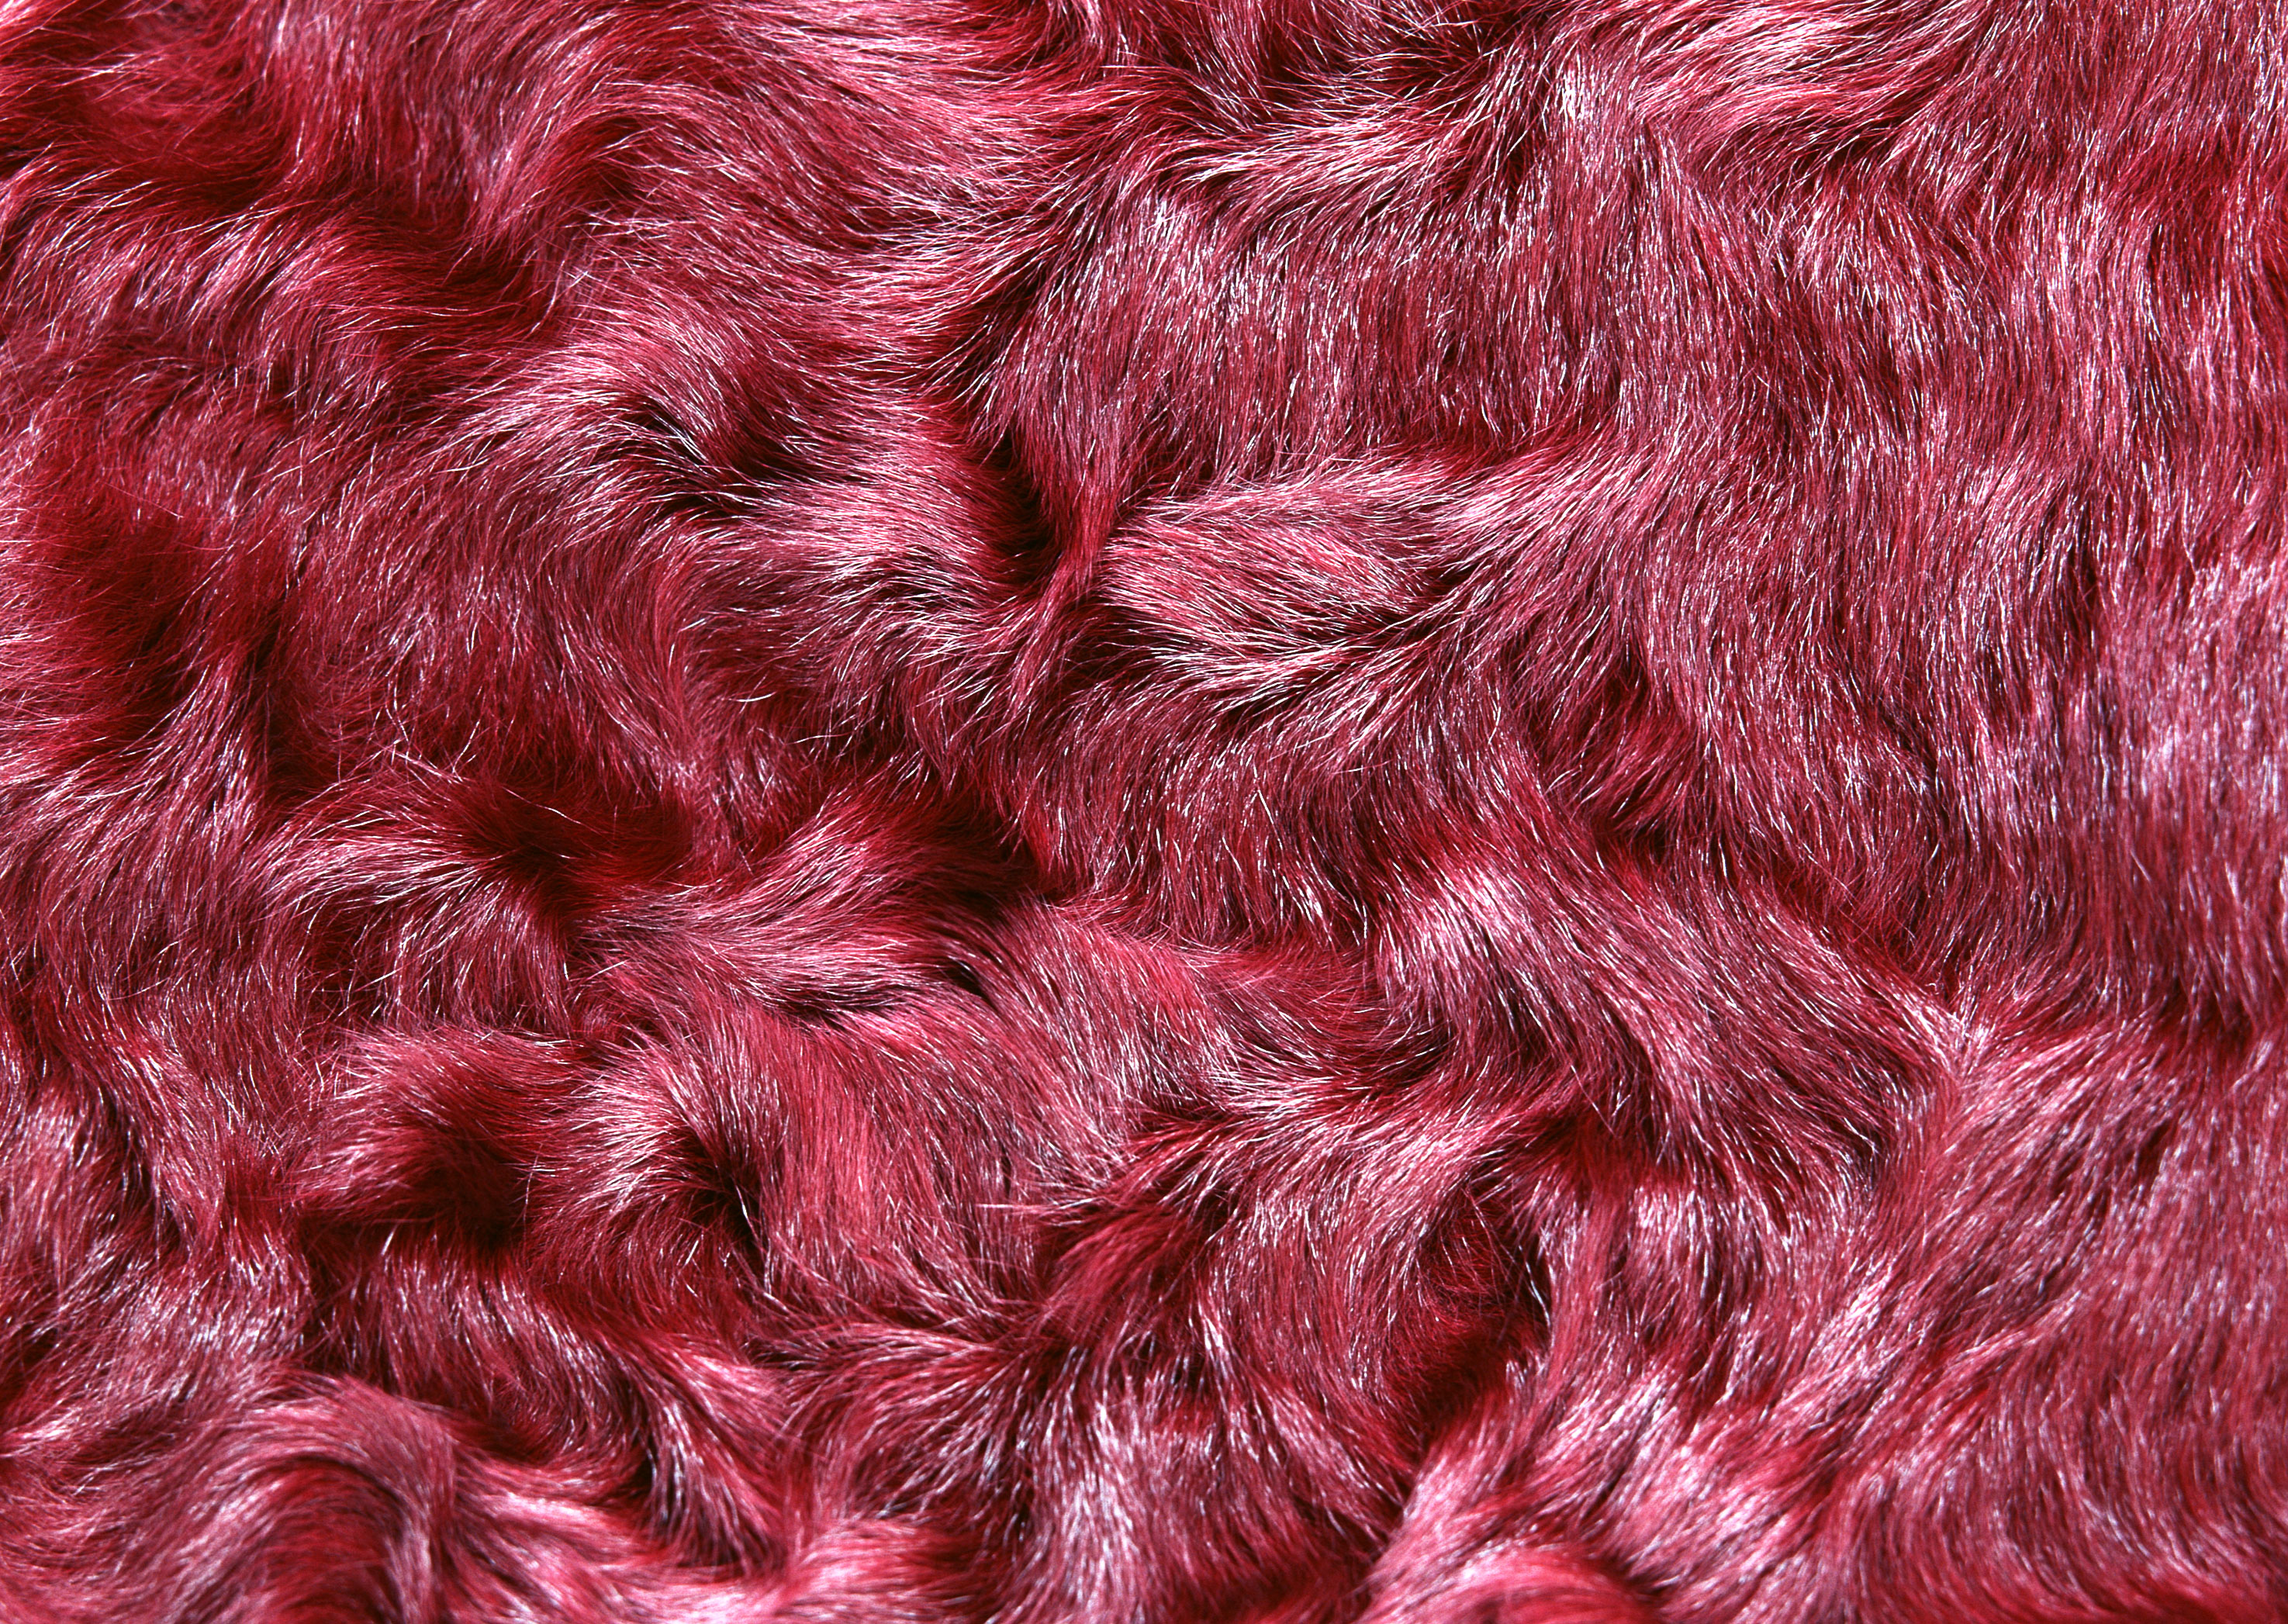 Pink fur texture background image